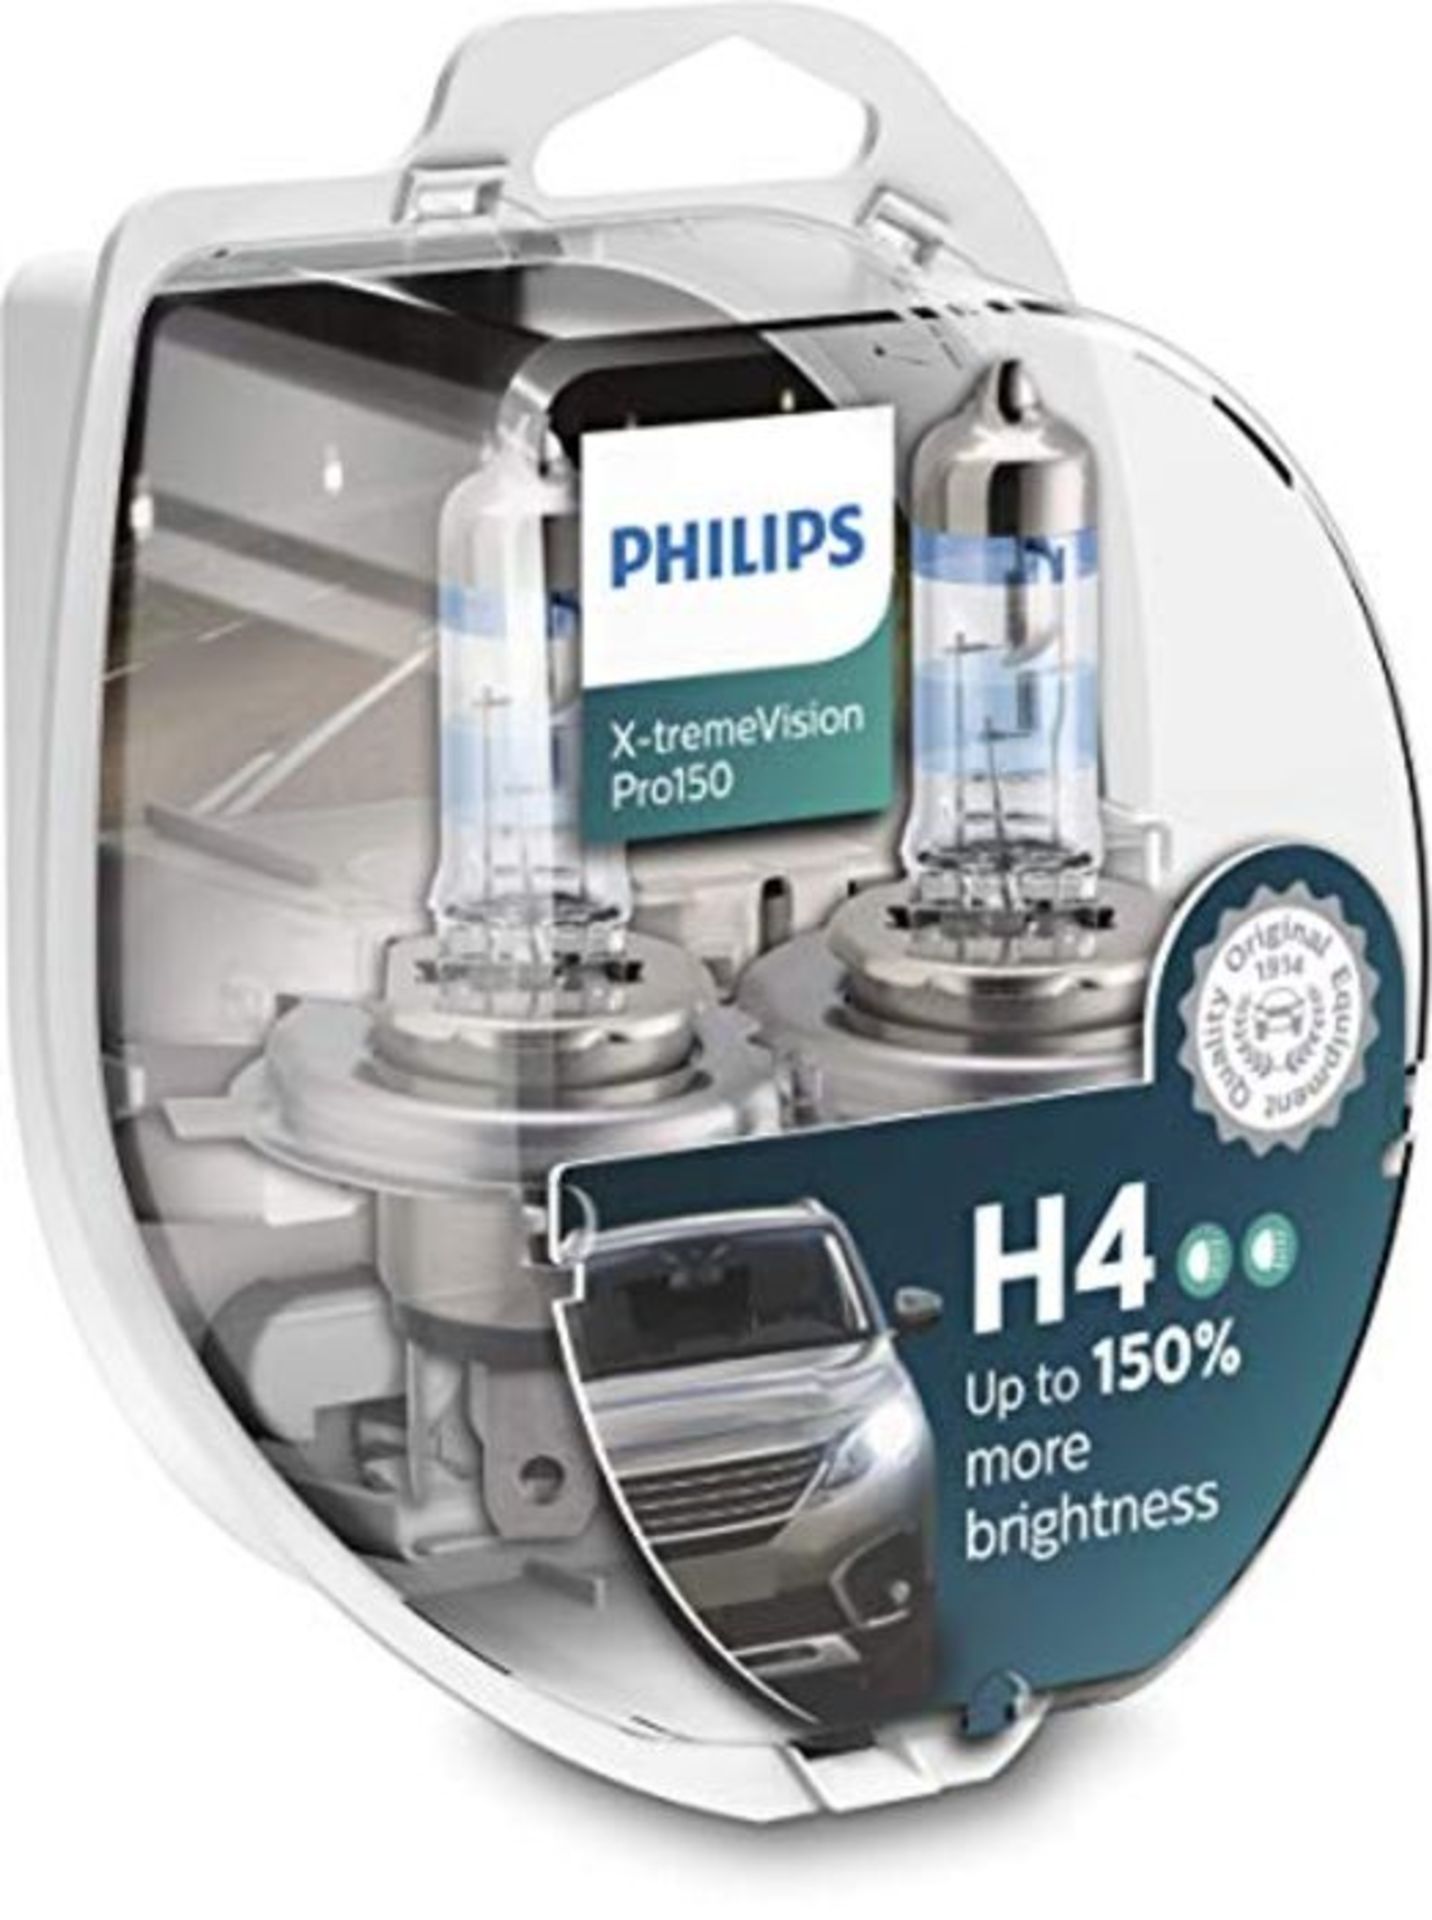 Philips X-tremeVision Pro150 H4 car headlight bulb +150%, set of 2